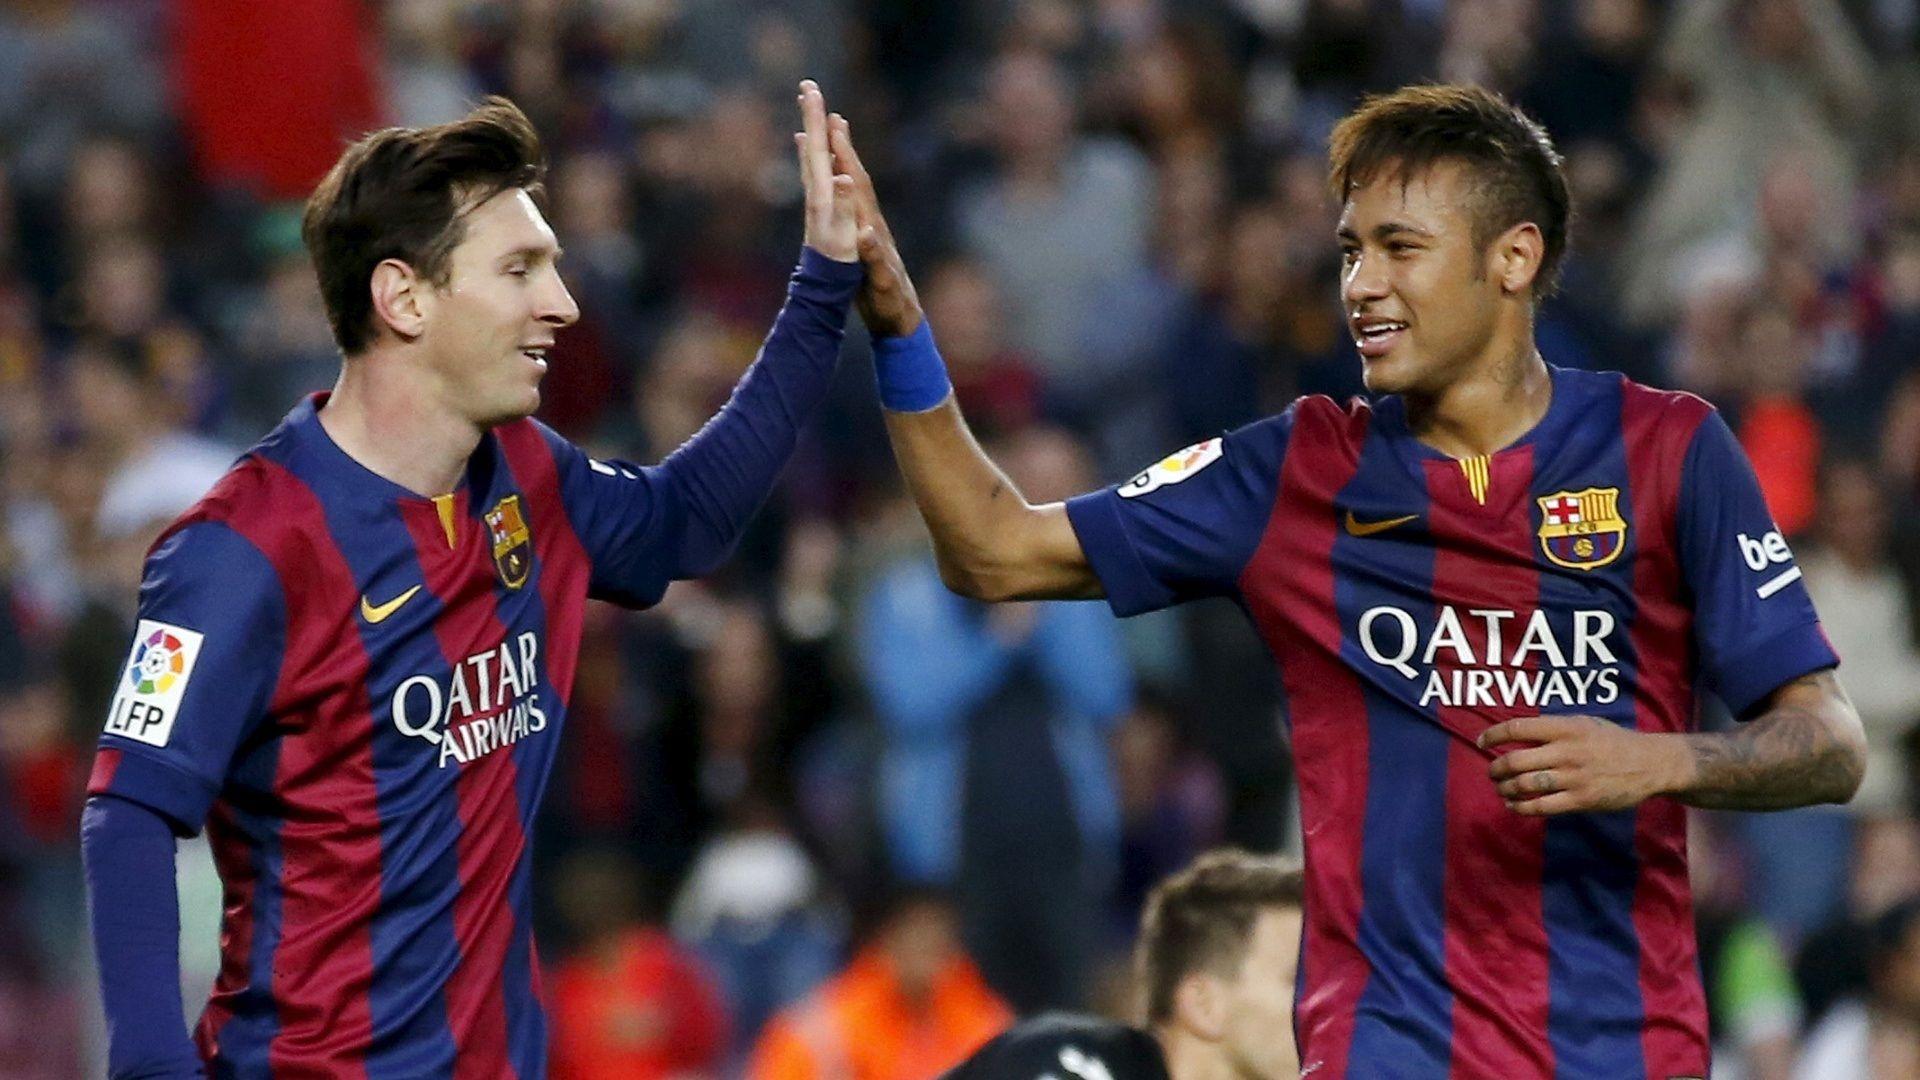 Barcelona Lionel Messi E Neymar Wallpaper Players Teams